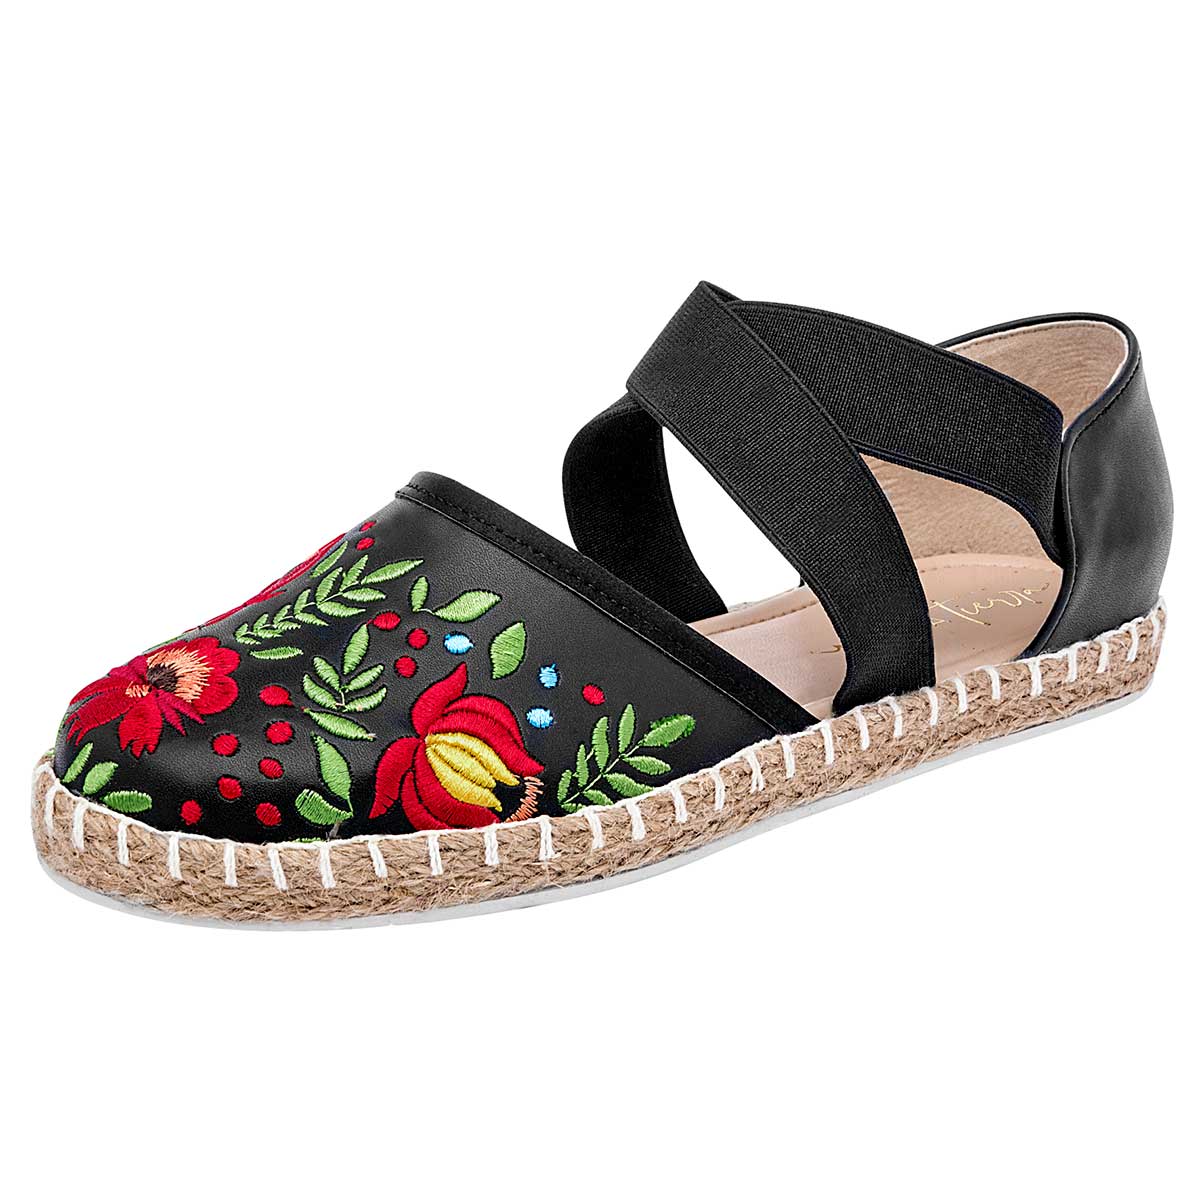 Pakar.com - Mayo: Regalos para mamá | Zapatos para mujer cod-109066